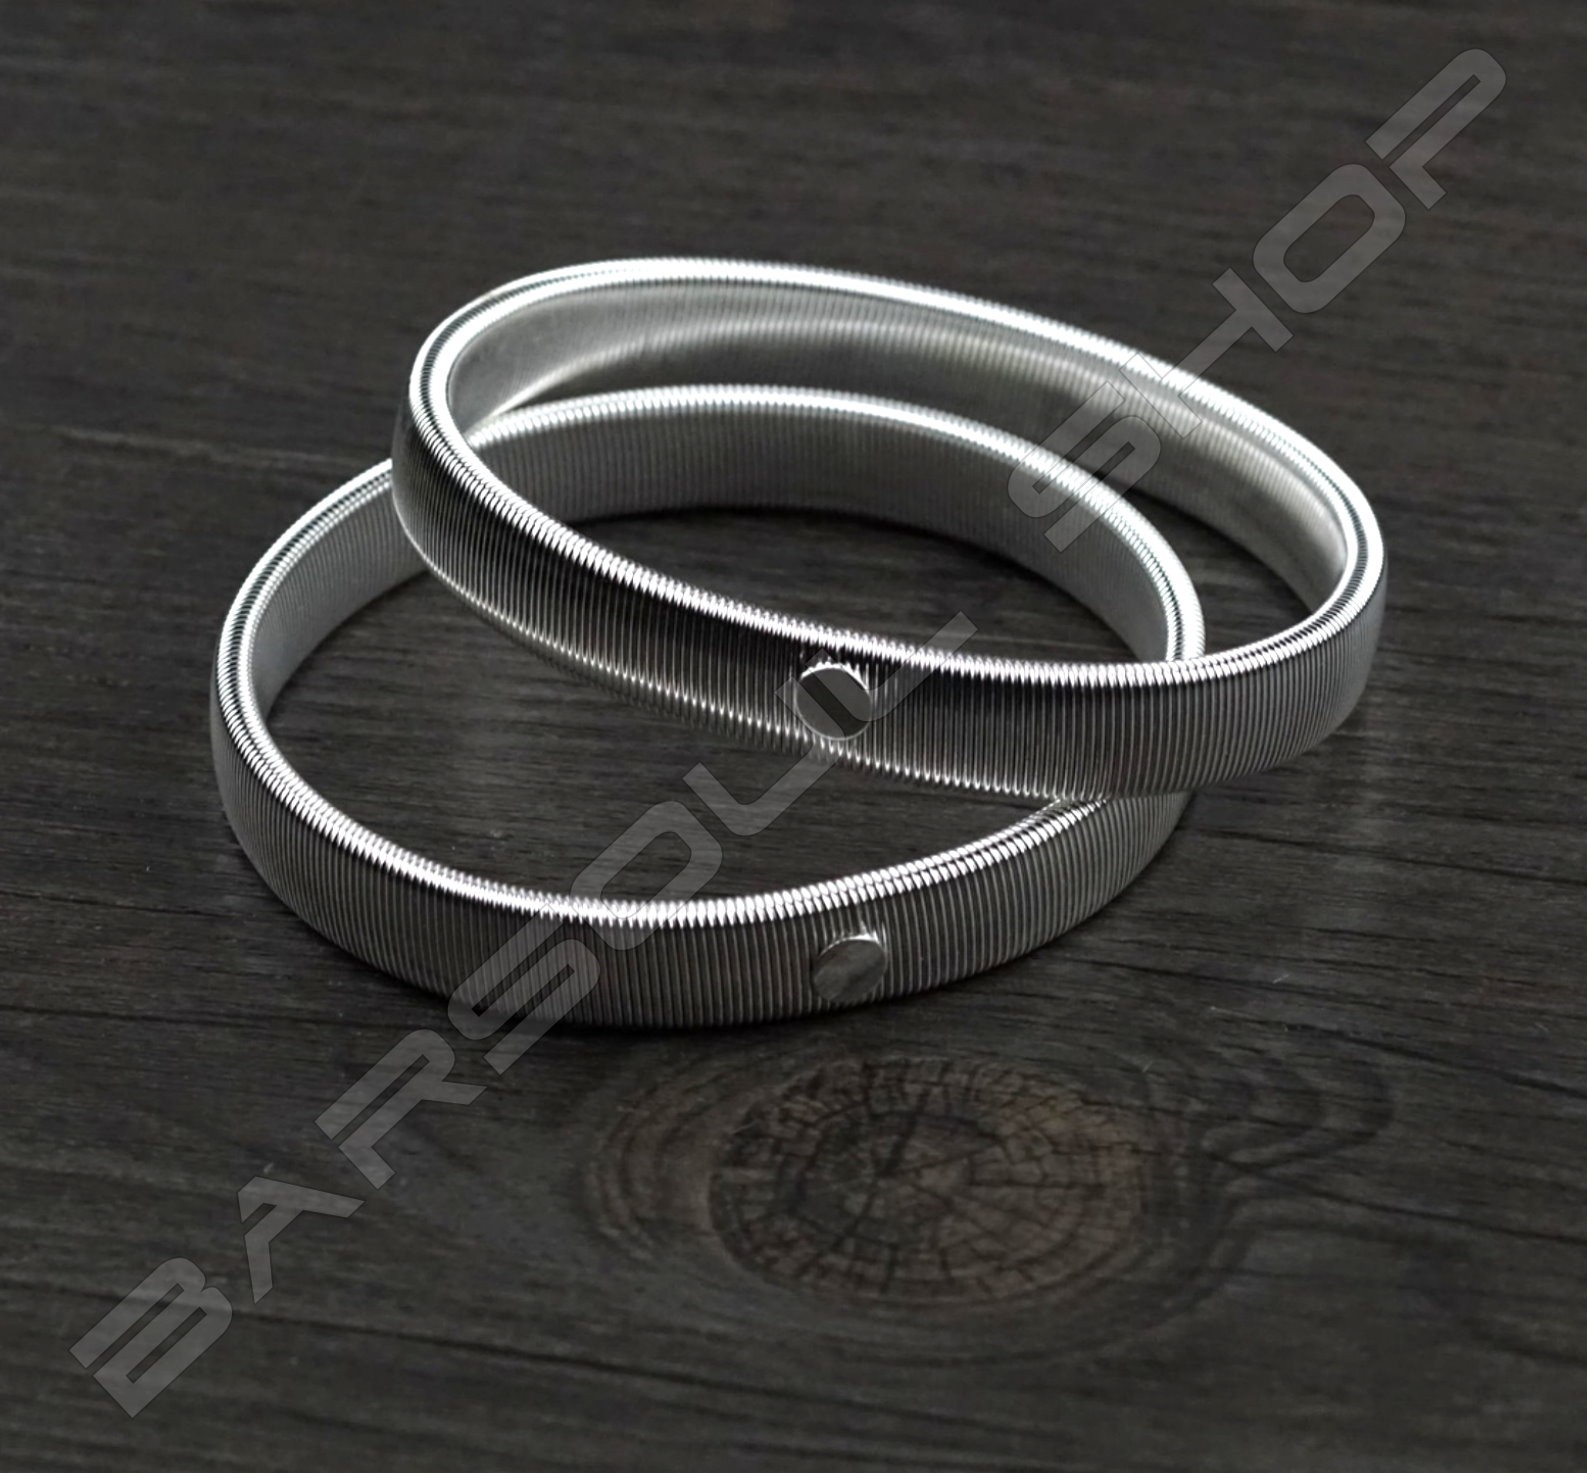 彈性金屬袖環組(銀色) Resilient metal sleeve garters(Silver)